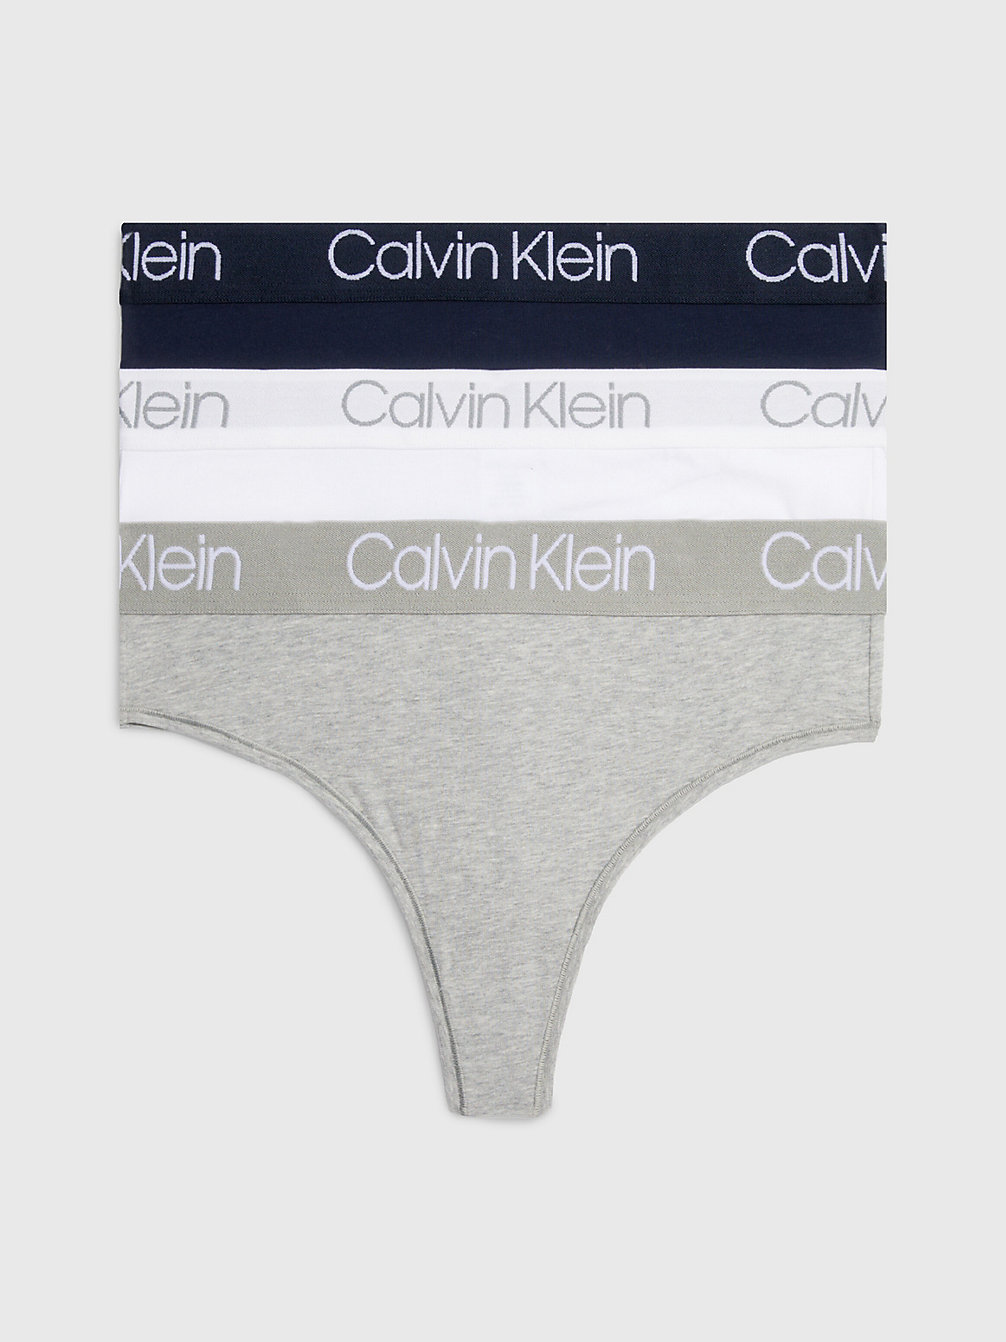 GREY / WHITE / BLUE Lot De 3 Strings Taille Haute - Body undefined femmes Calvin Klein